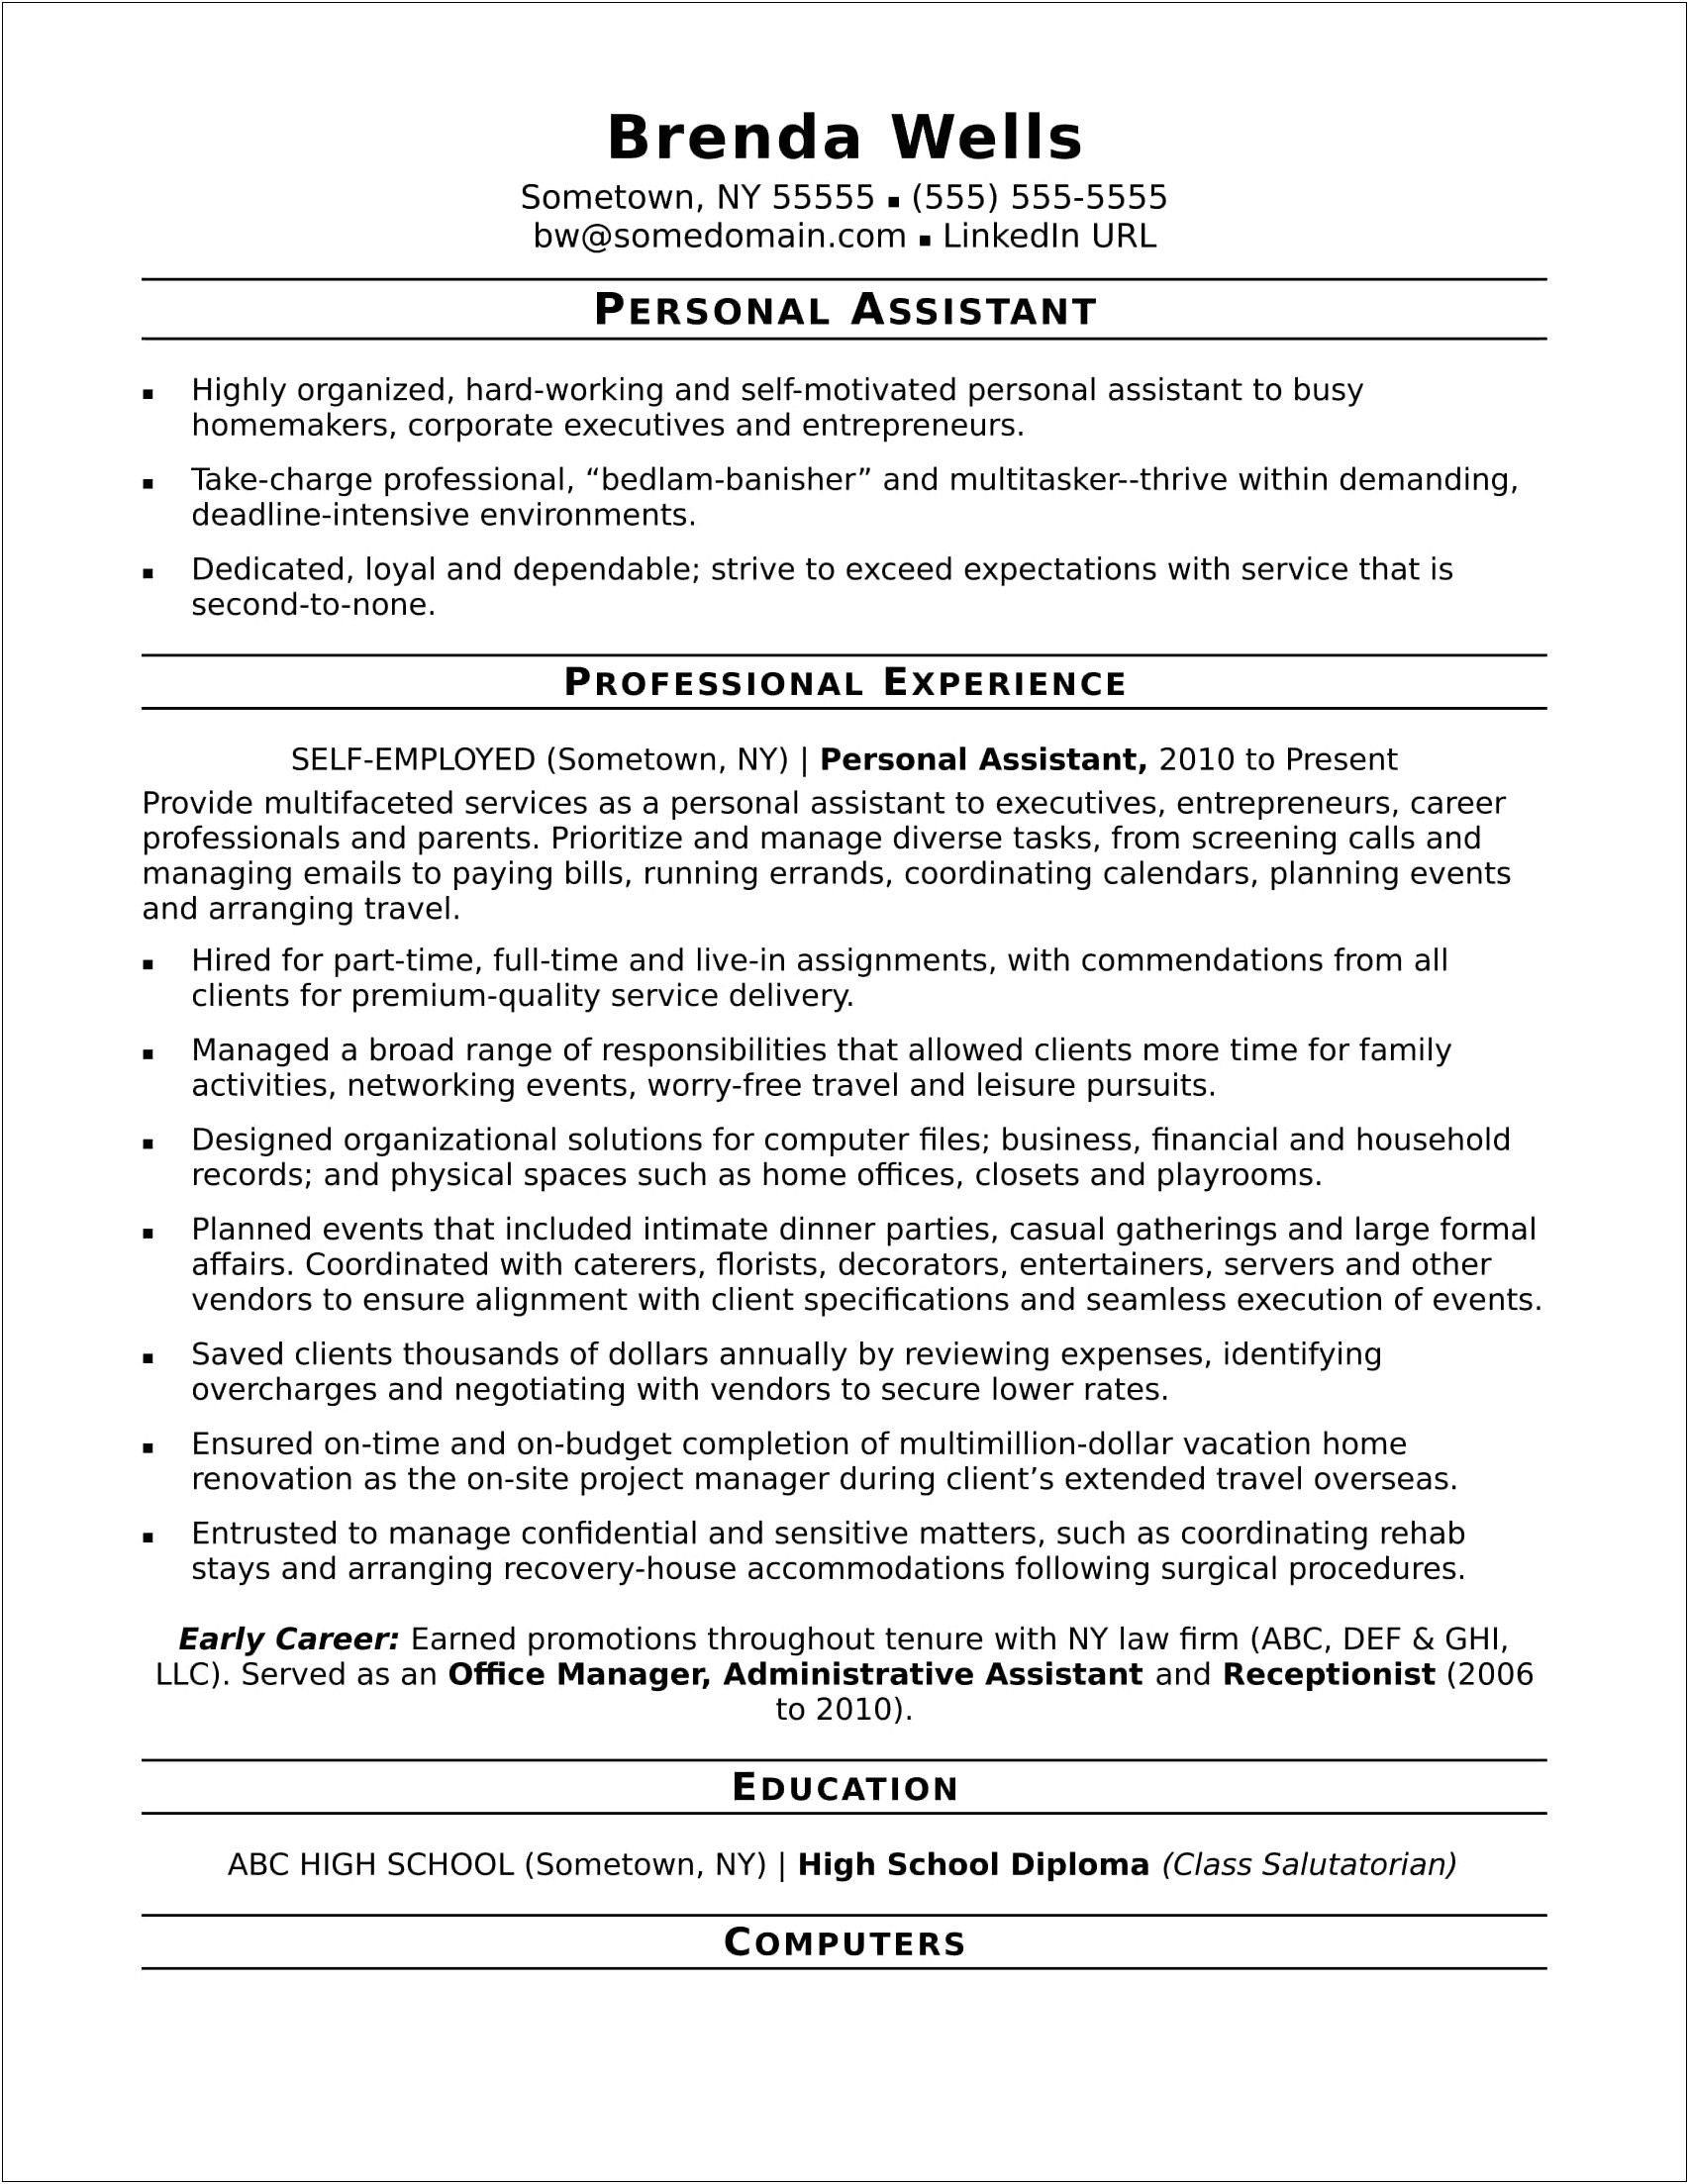 Job Description For Executive Assistant For Resume